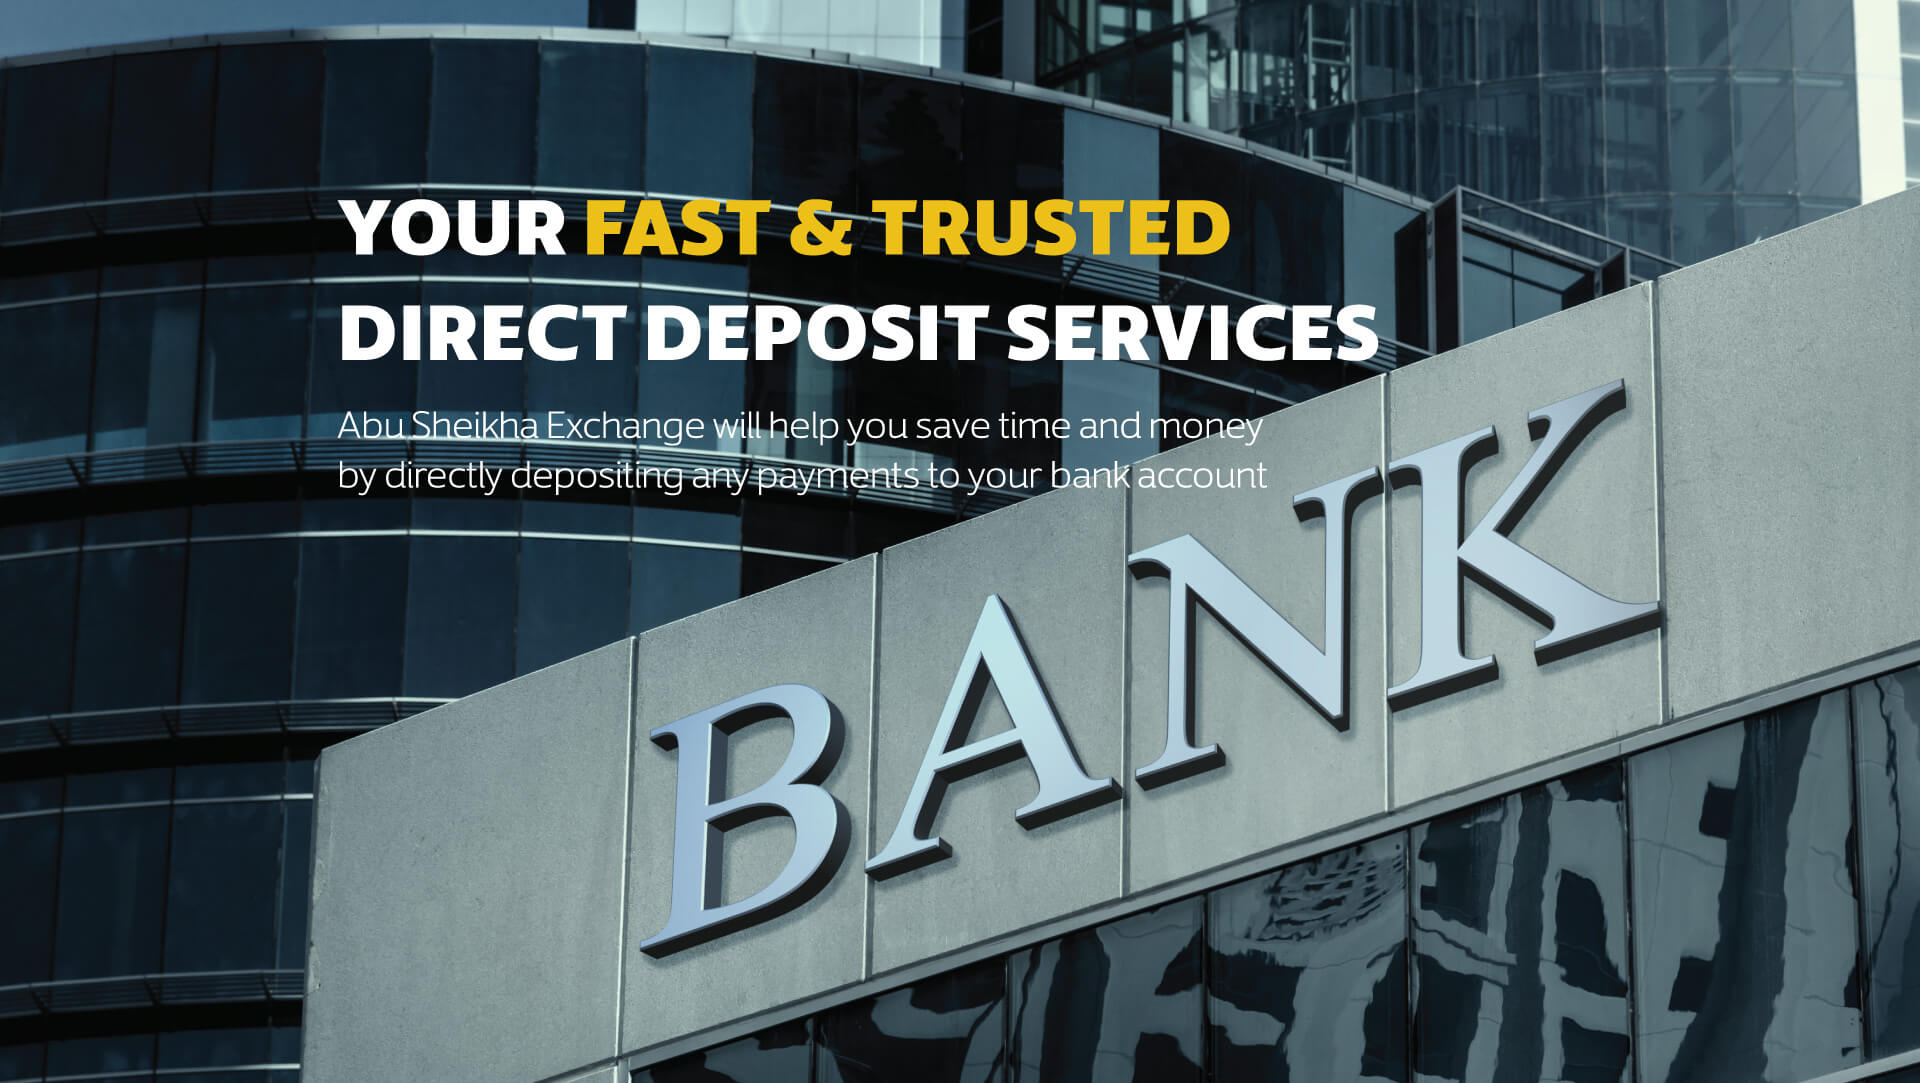 Td direct deposit application